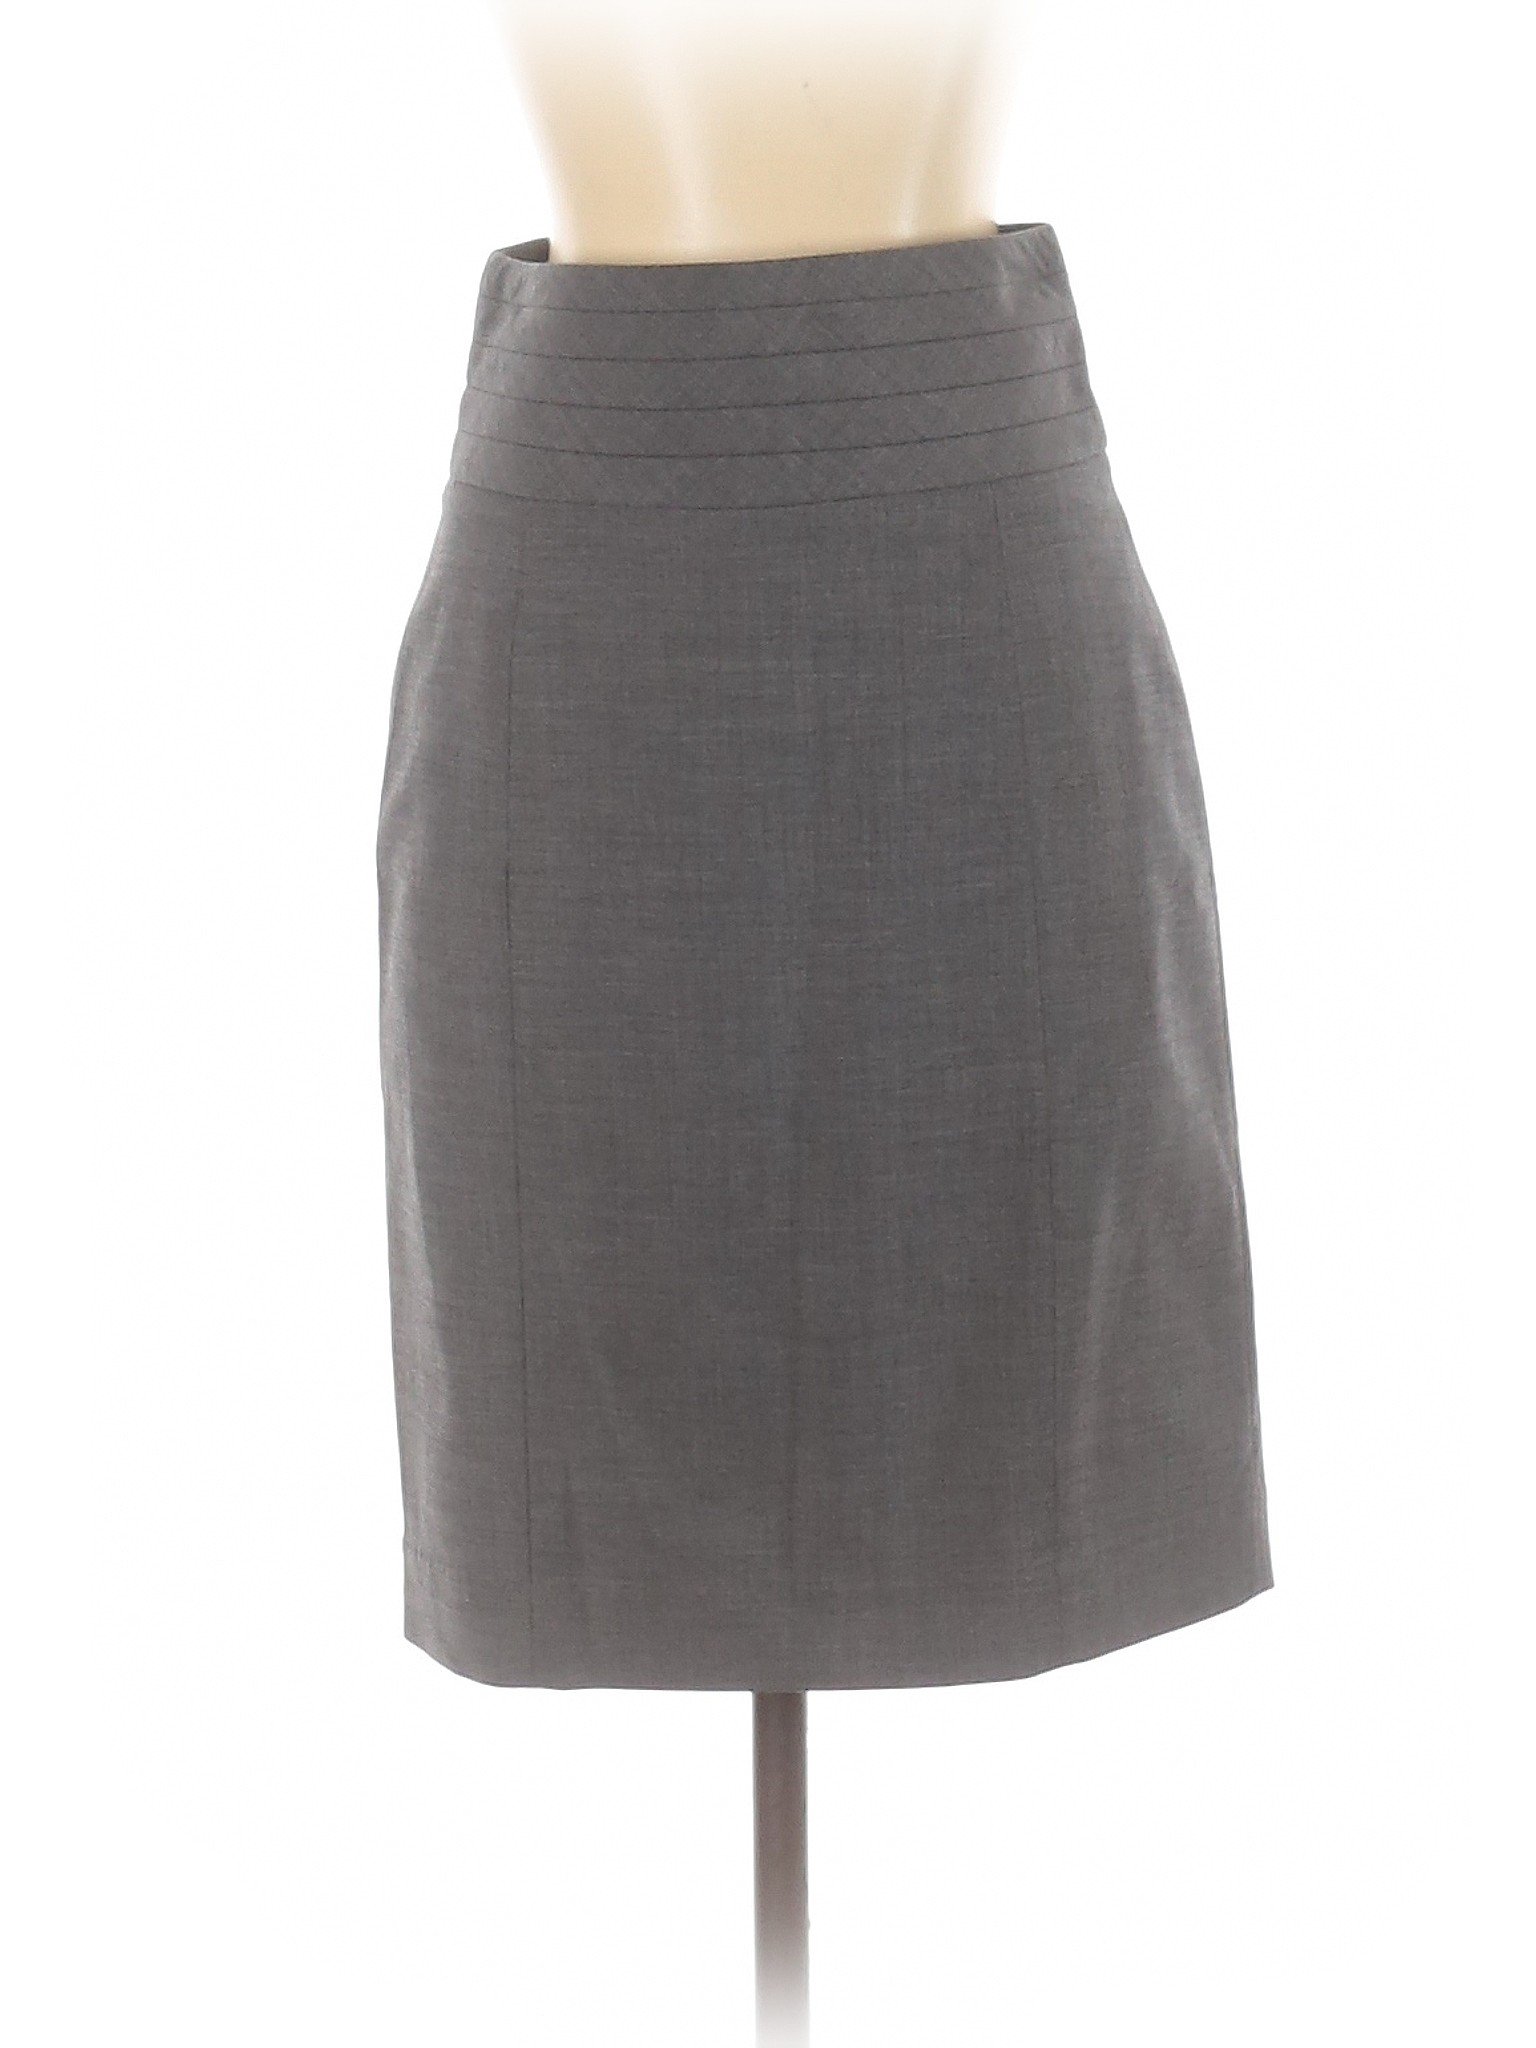 H&M Women Gray Casual Skirt 4 | eBay